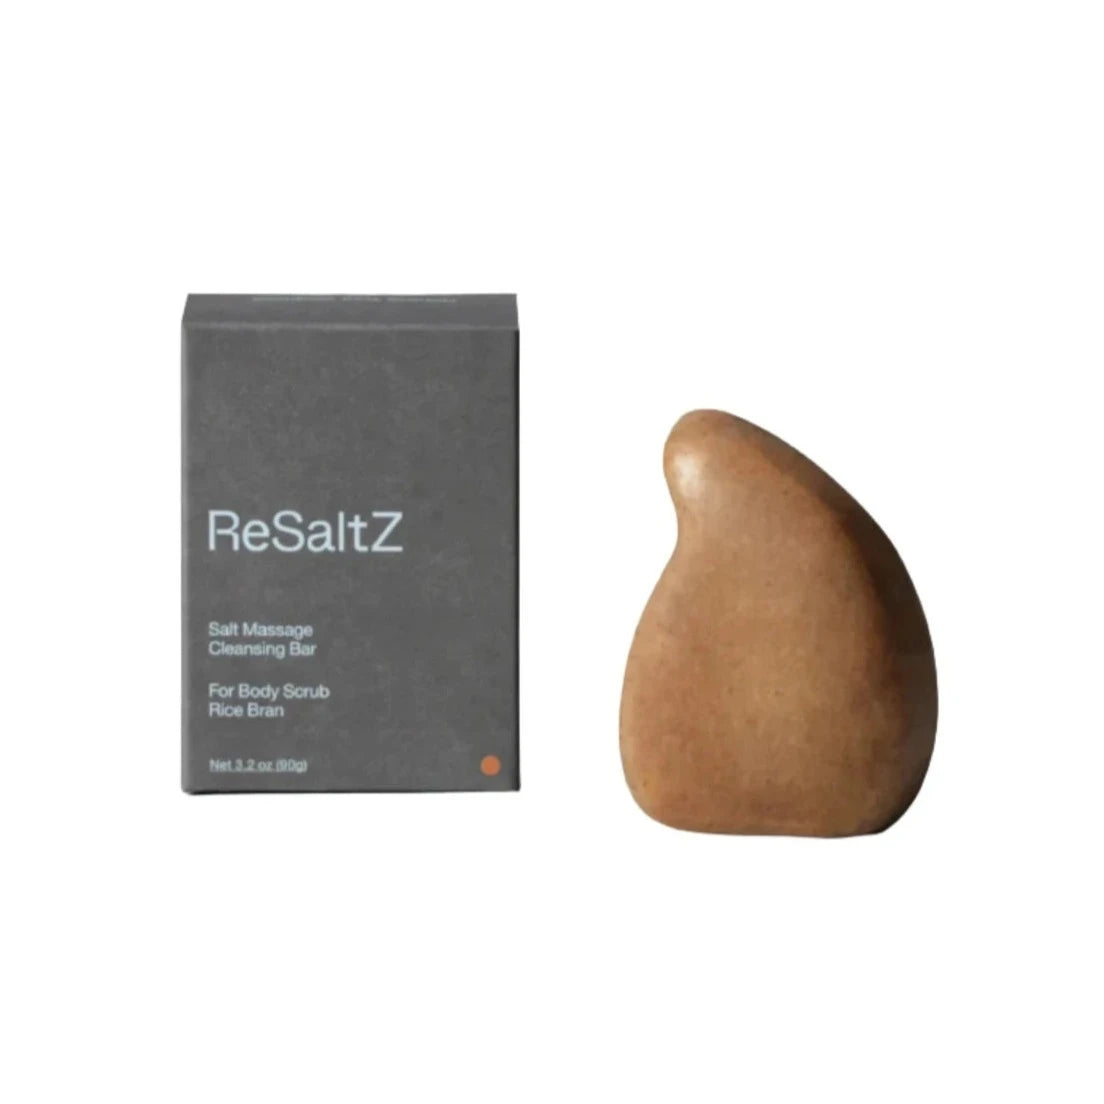 ReSaltZ Salt Massage Cleansing Bar For Body Scrub Rice Bran